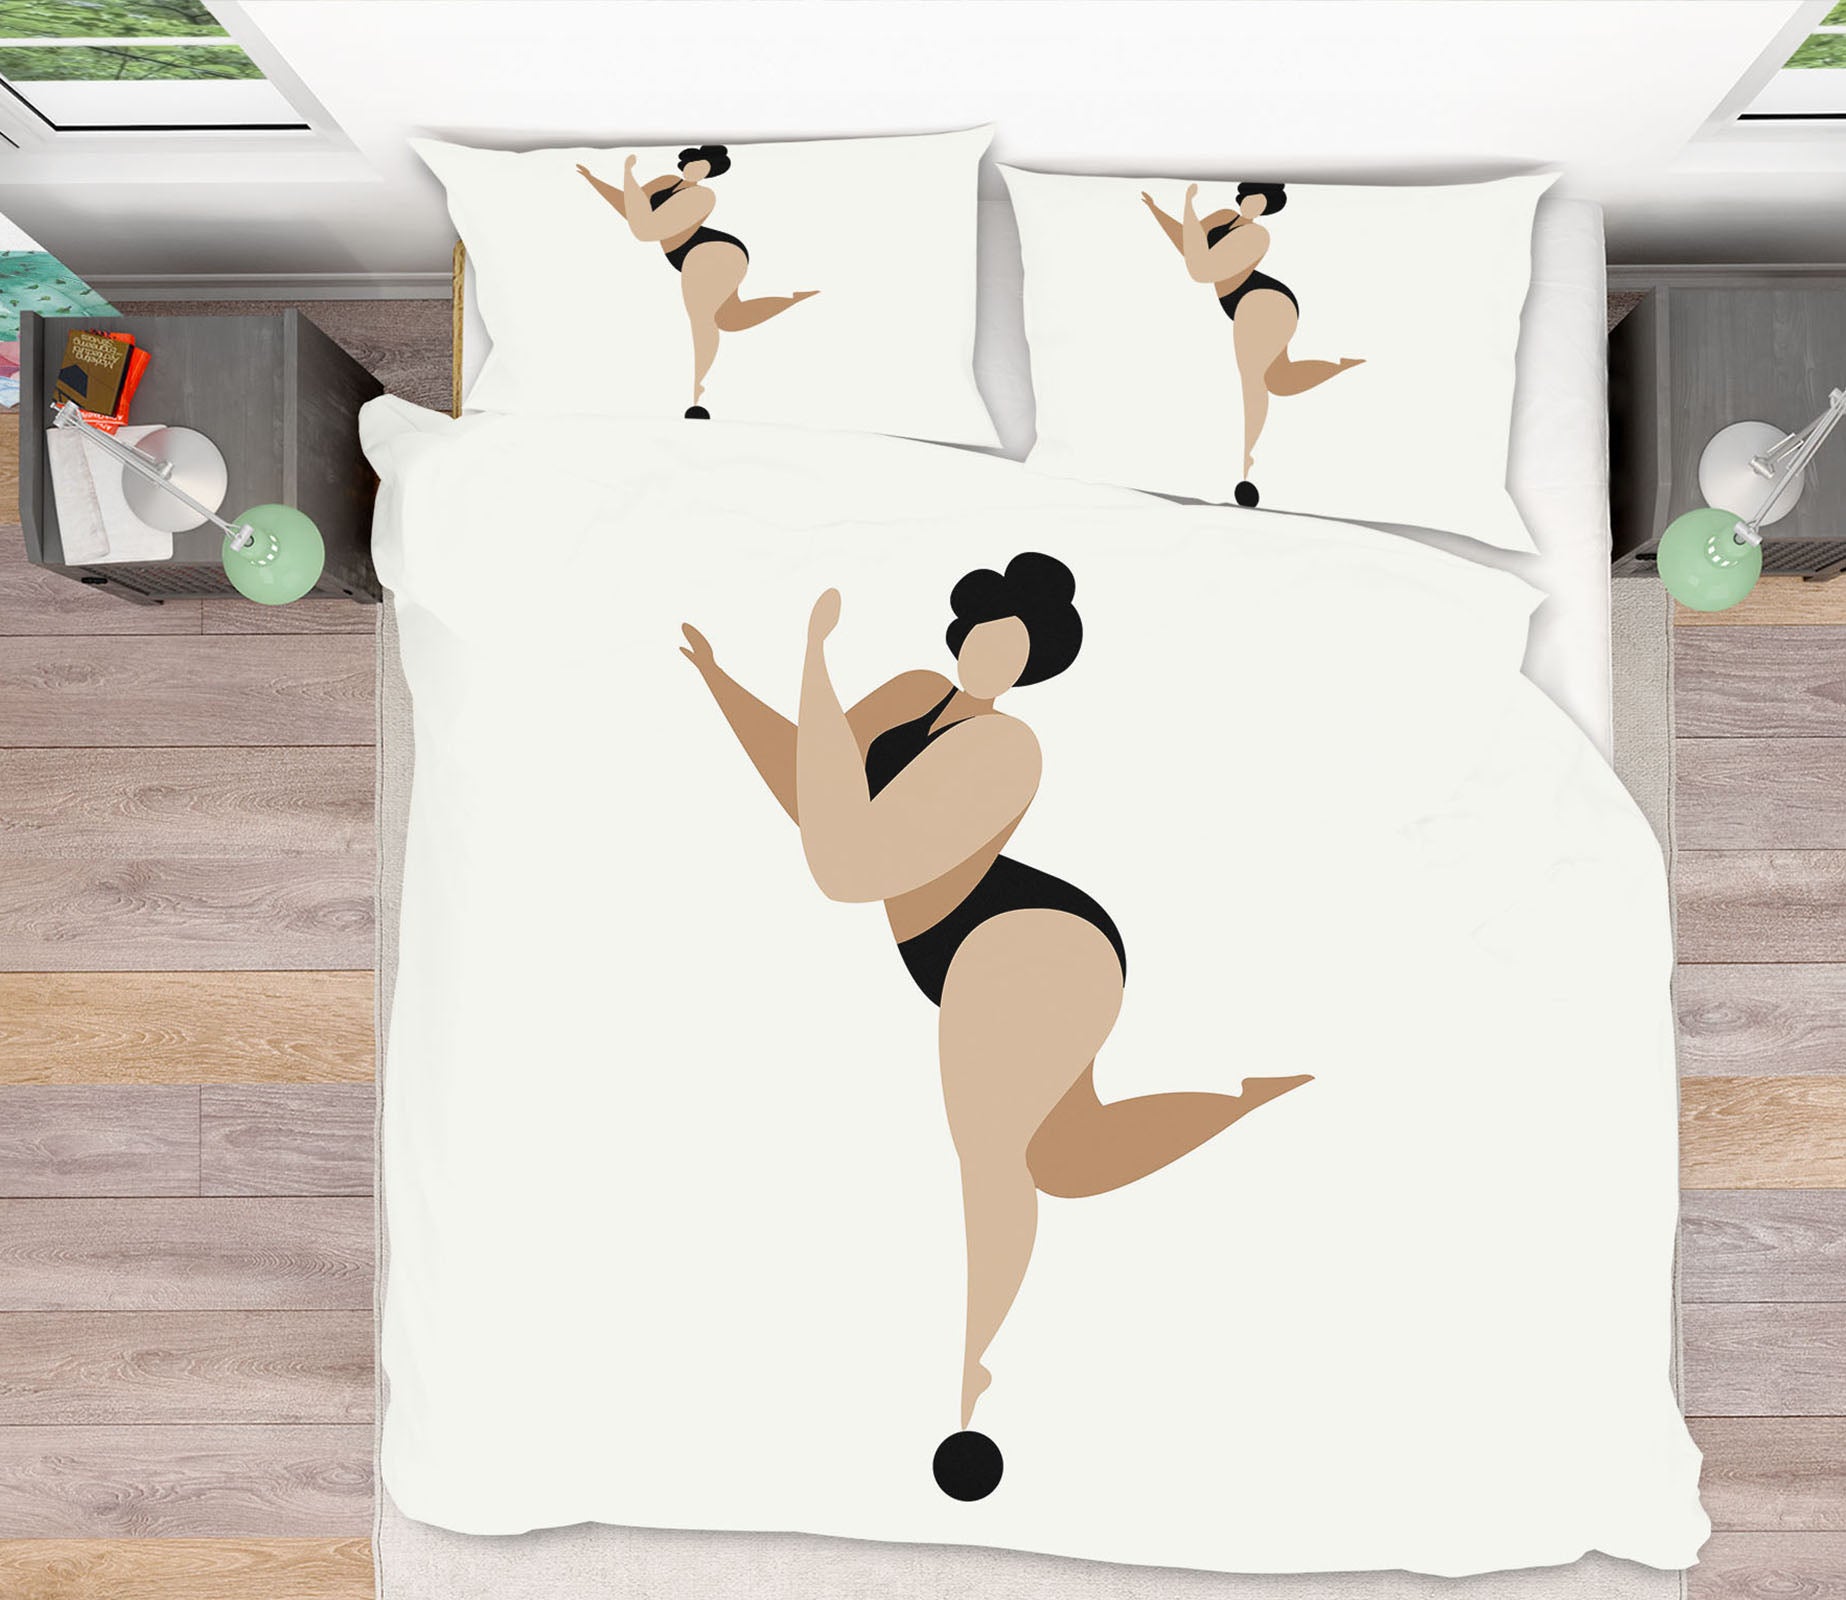 3D Athlete Pattern 134 Boris Draschoff Bedding Bed Pillowcases Quilt